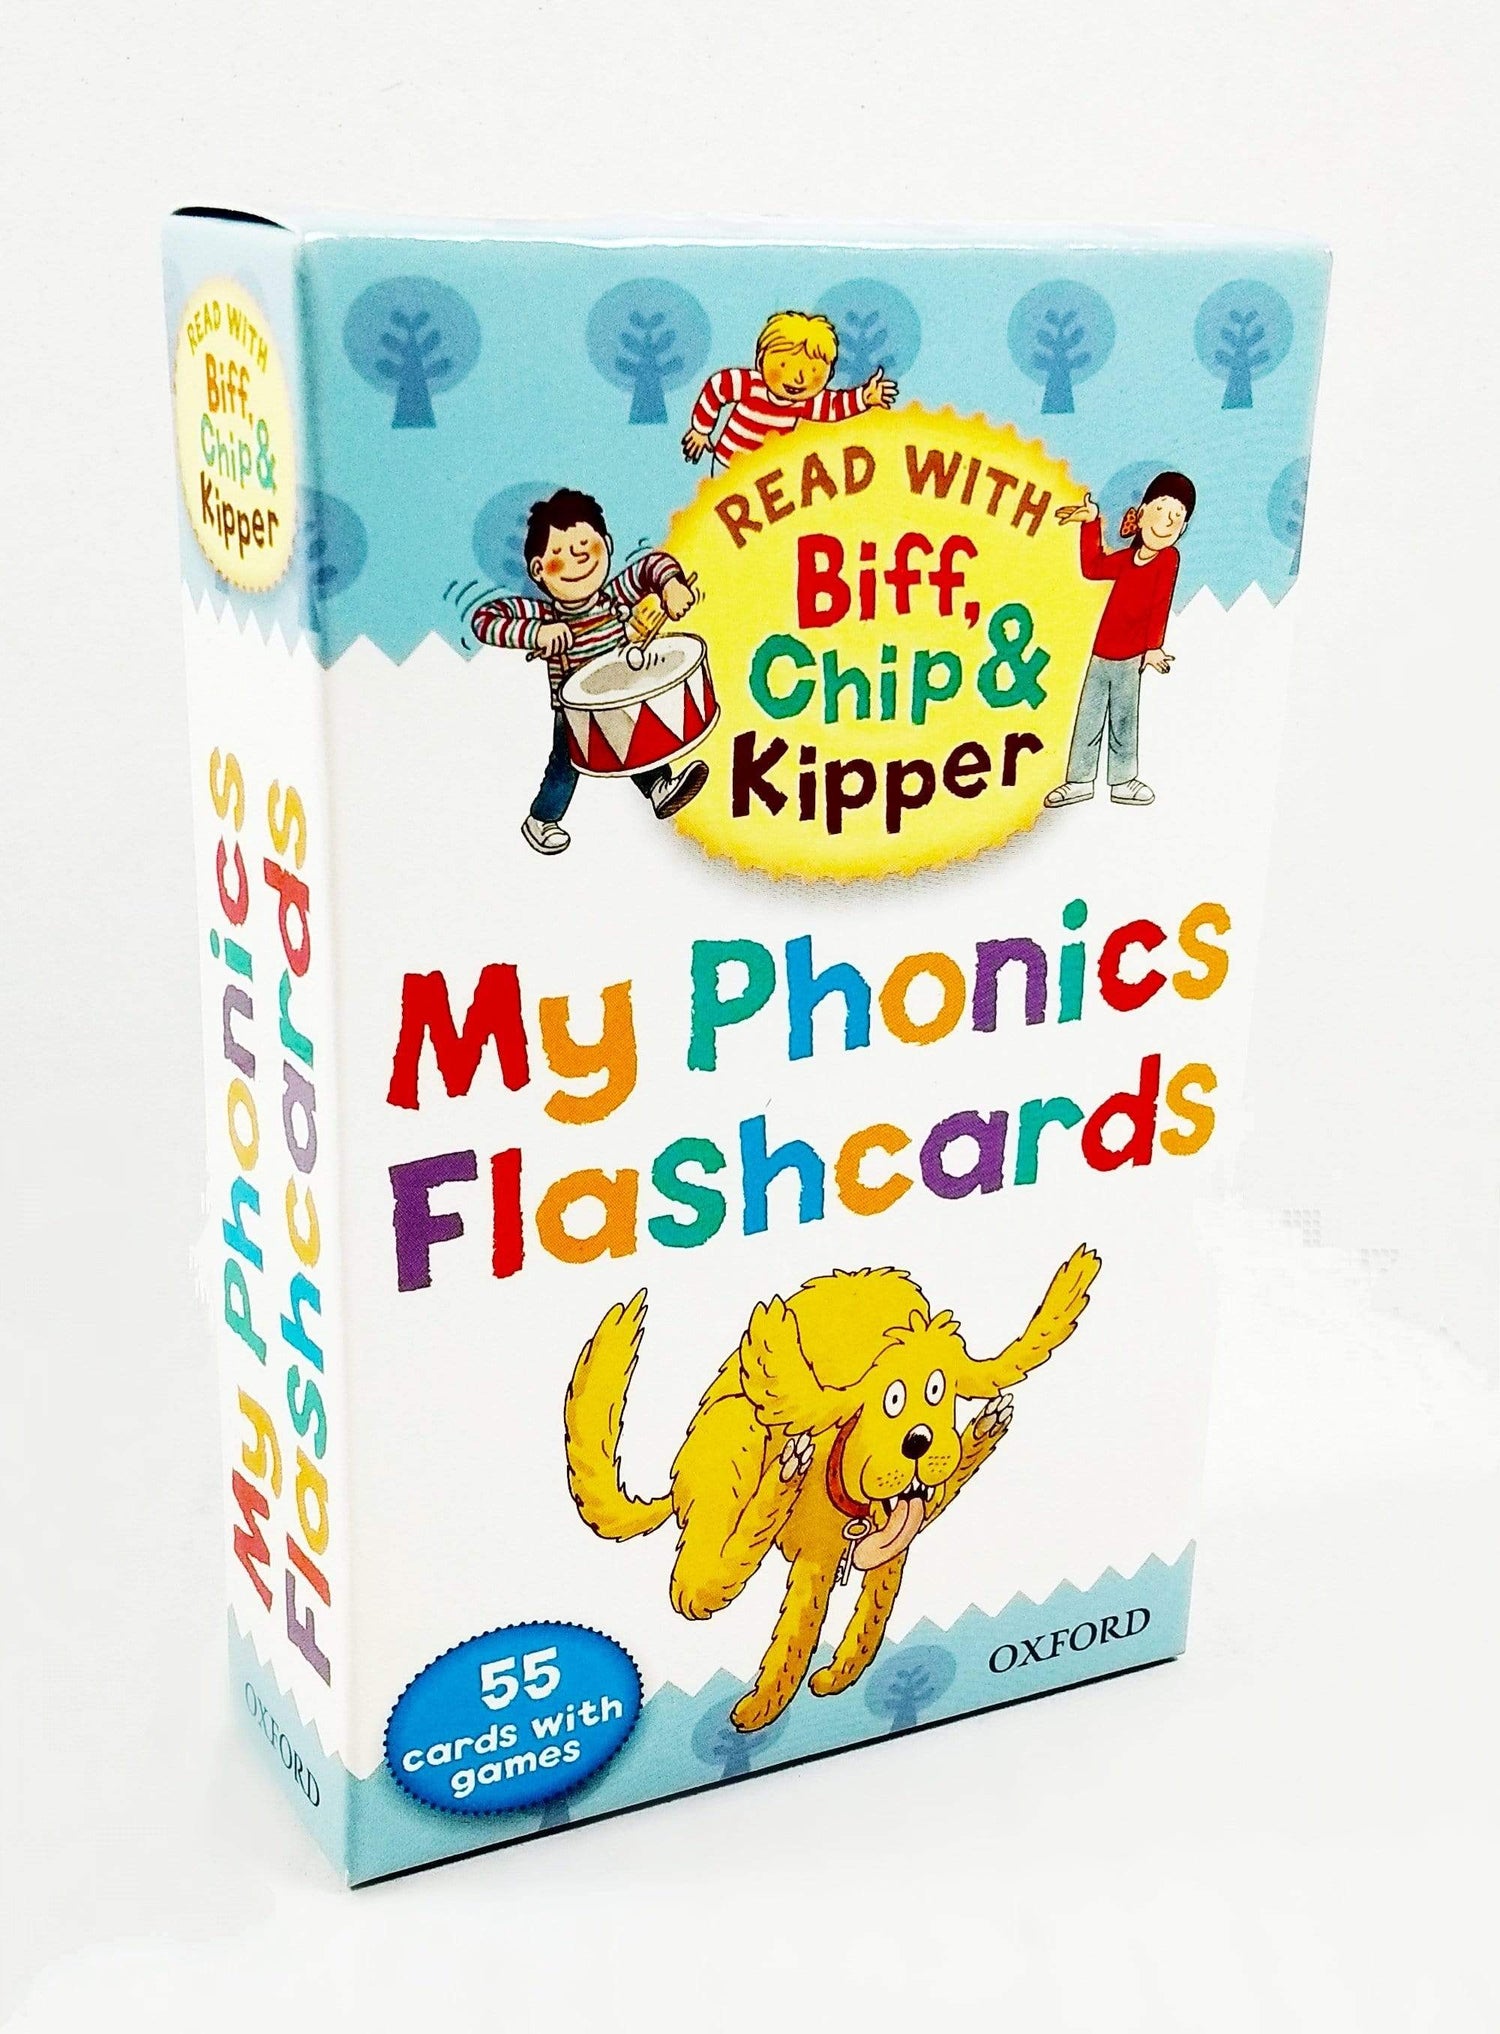 Read with Biff, Chip & Kipper: My Phonics Flashcards